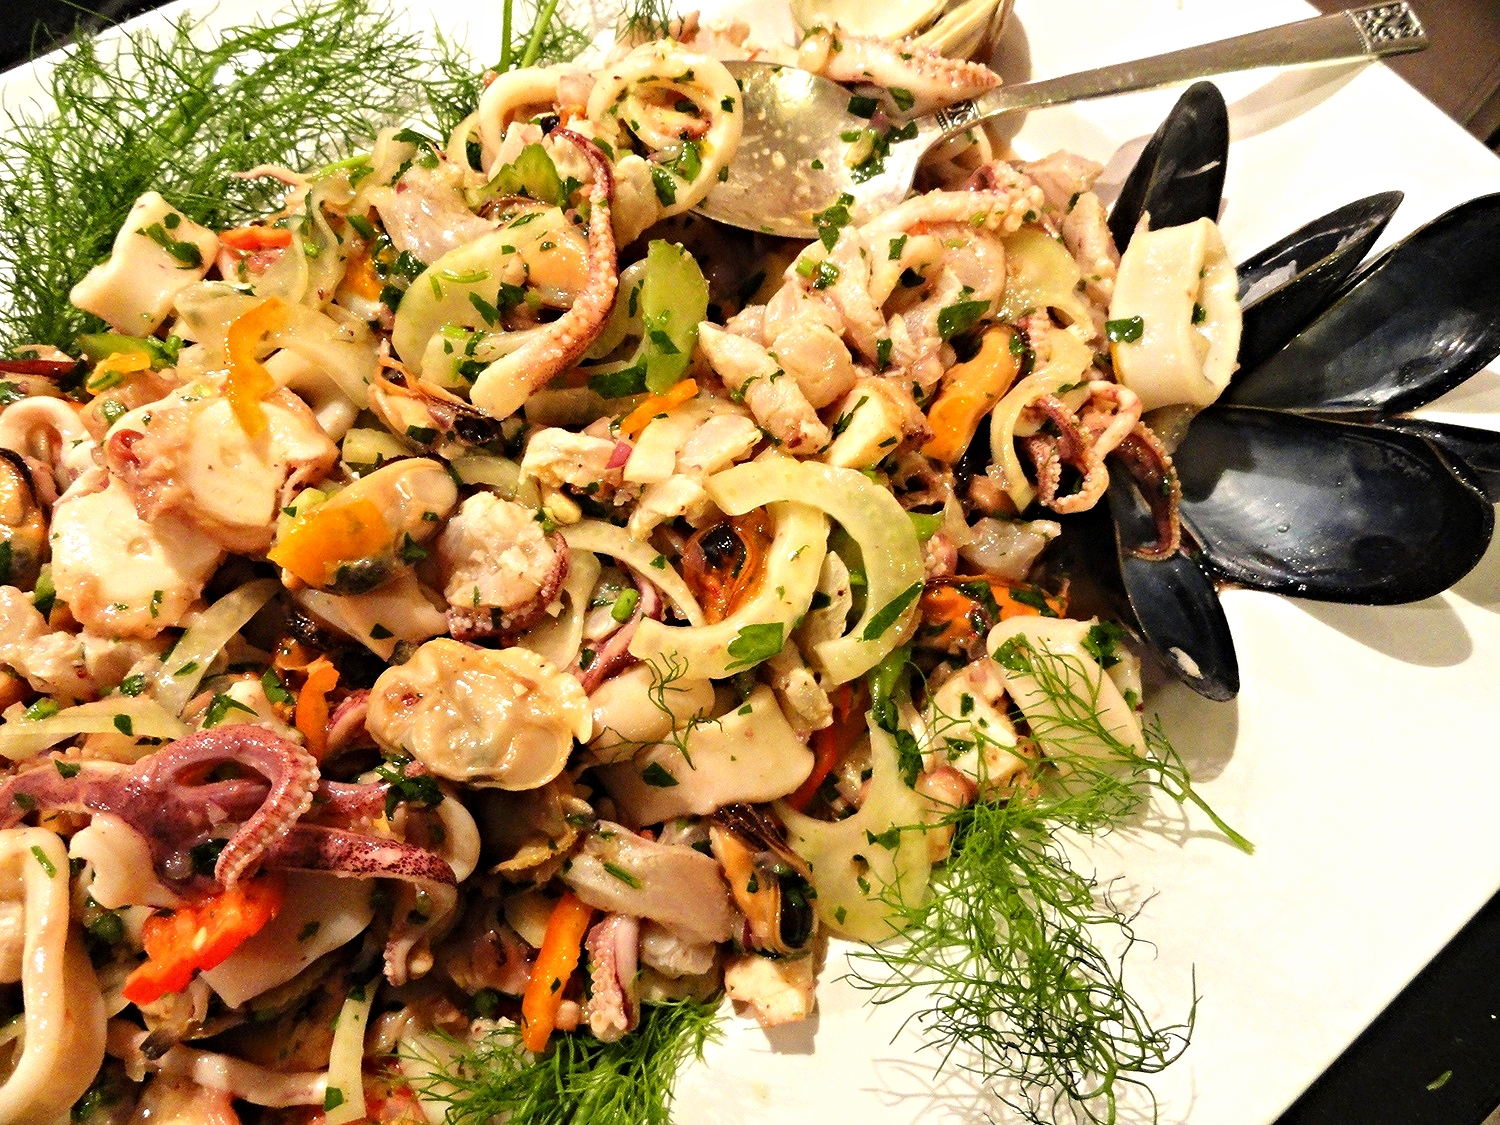 Amalfi Coast seafood salad in herbed citrus dressing